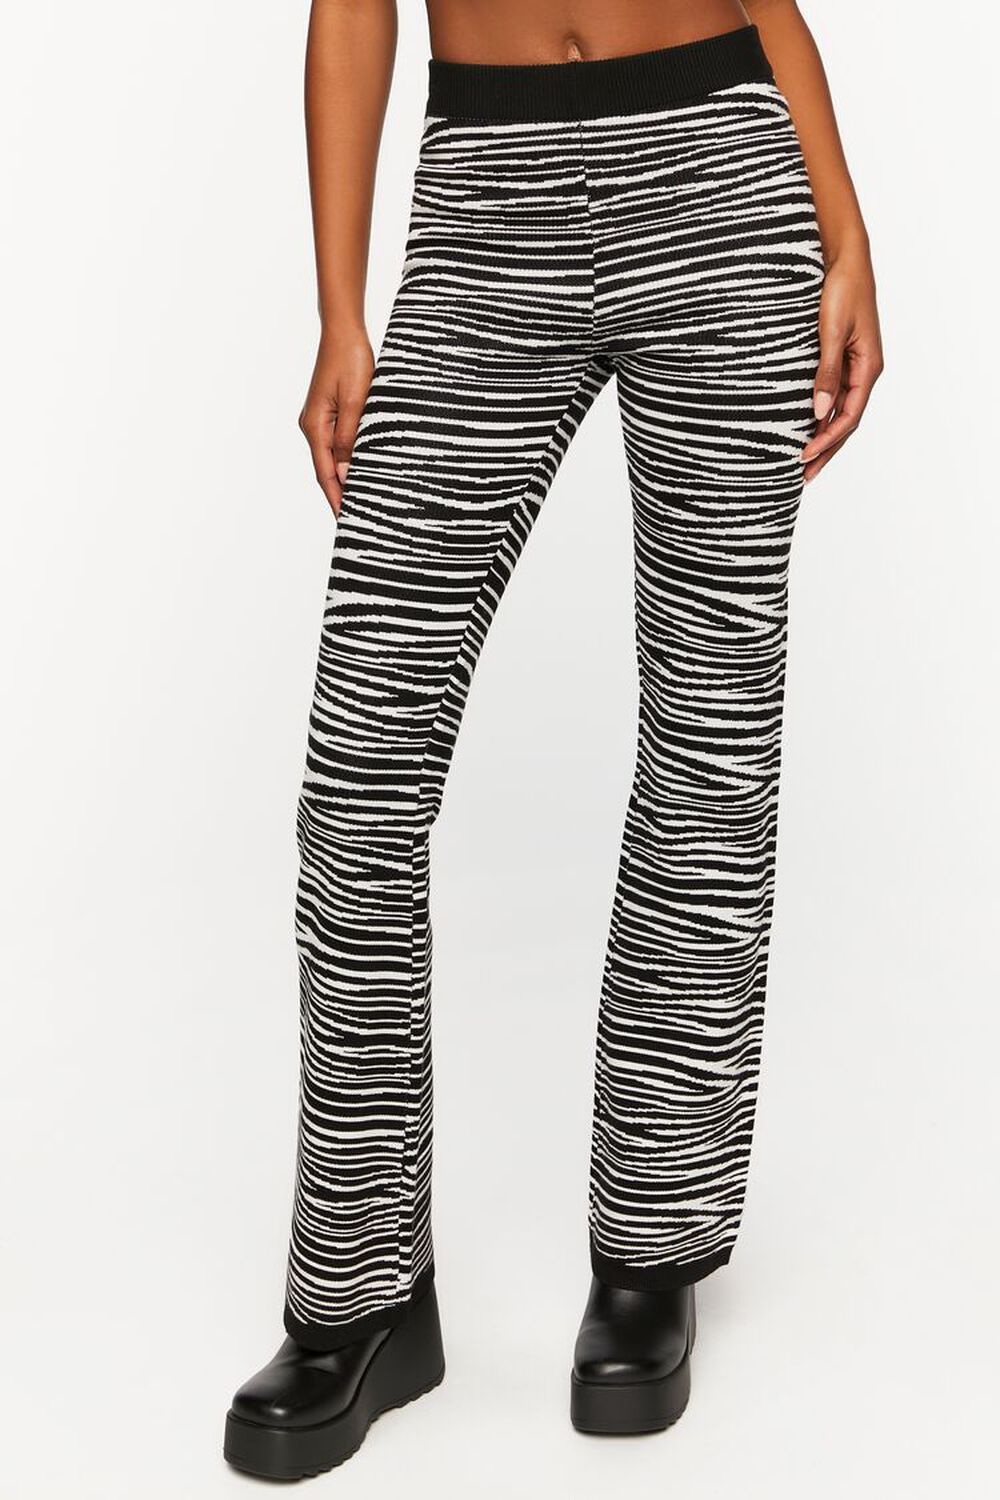 BLACK/WHITE Zebra Print Flare Pants, image 2